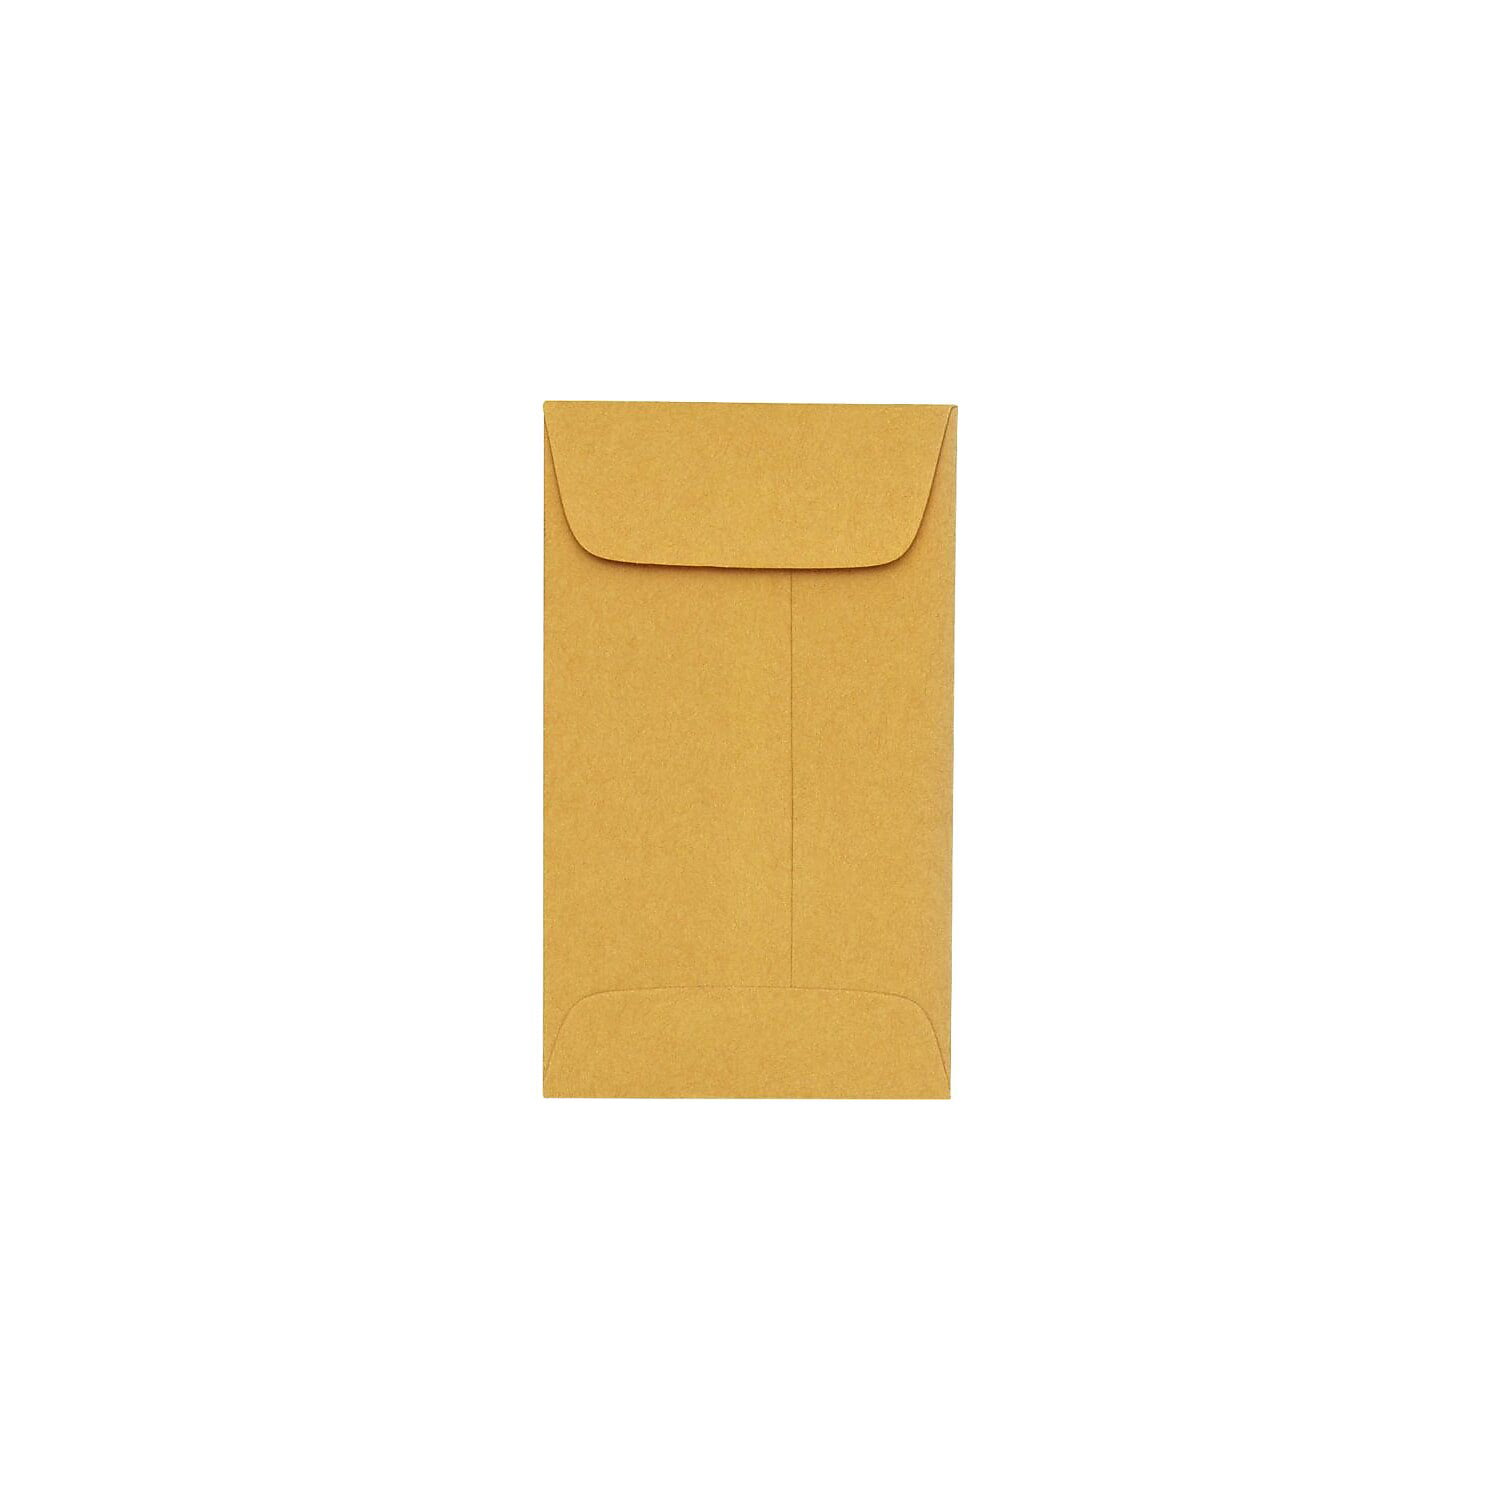 Handmade seed envelopes 1-3/4"x2-1/2" small coin money catalog storage gum flap 